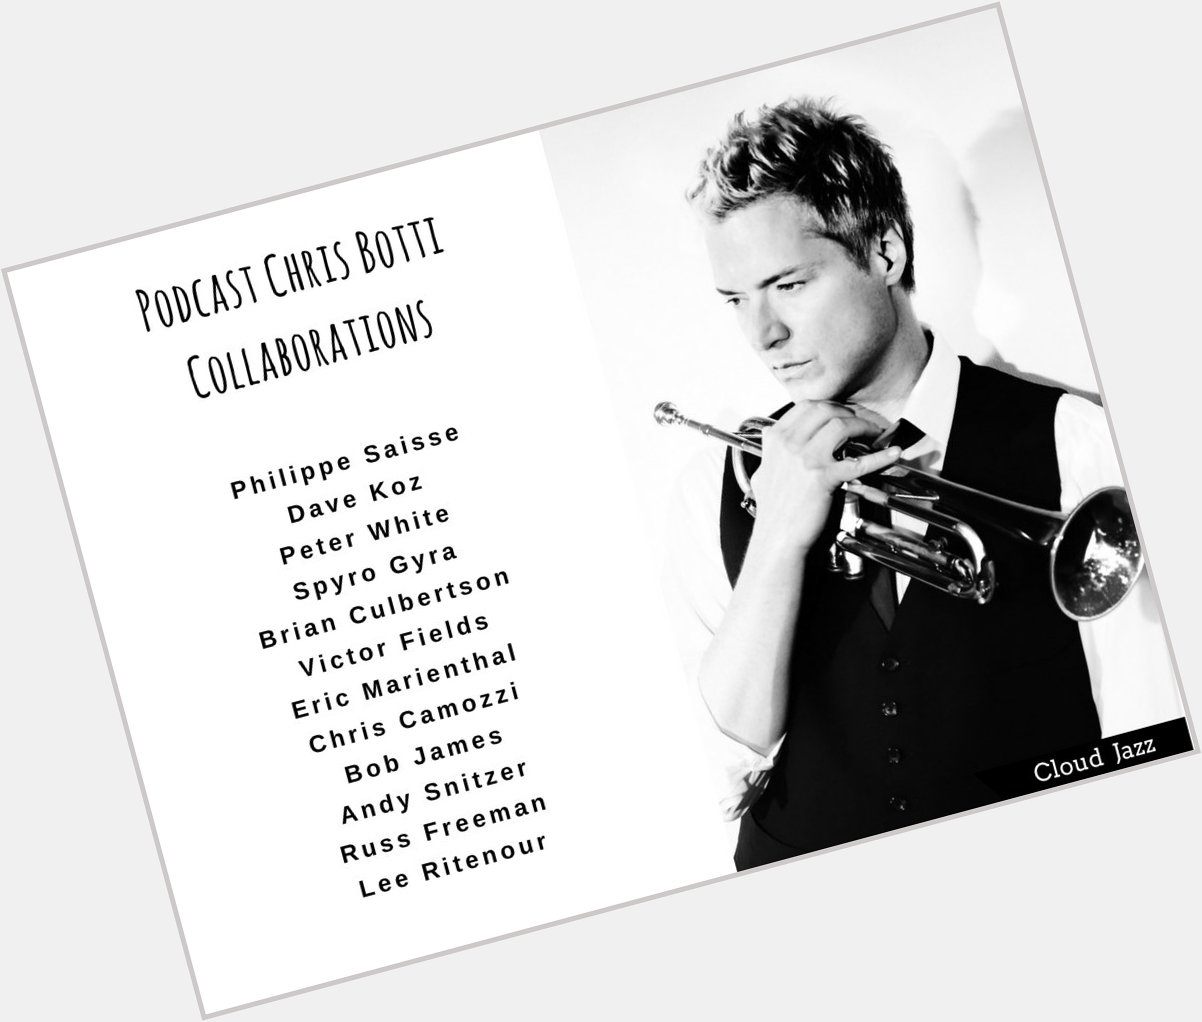 Happy Birthday Chris Botti !!
Hoy cumple 55 años el trompetista Chris Botti.

Podcast:  